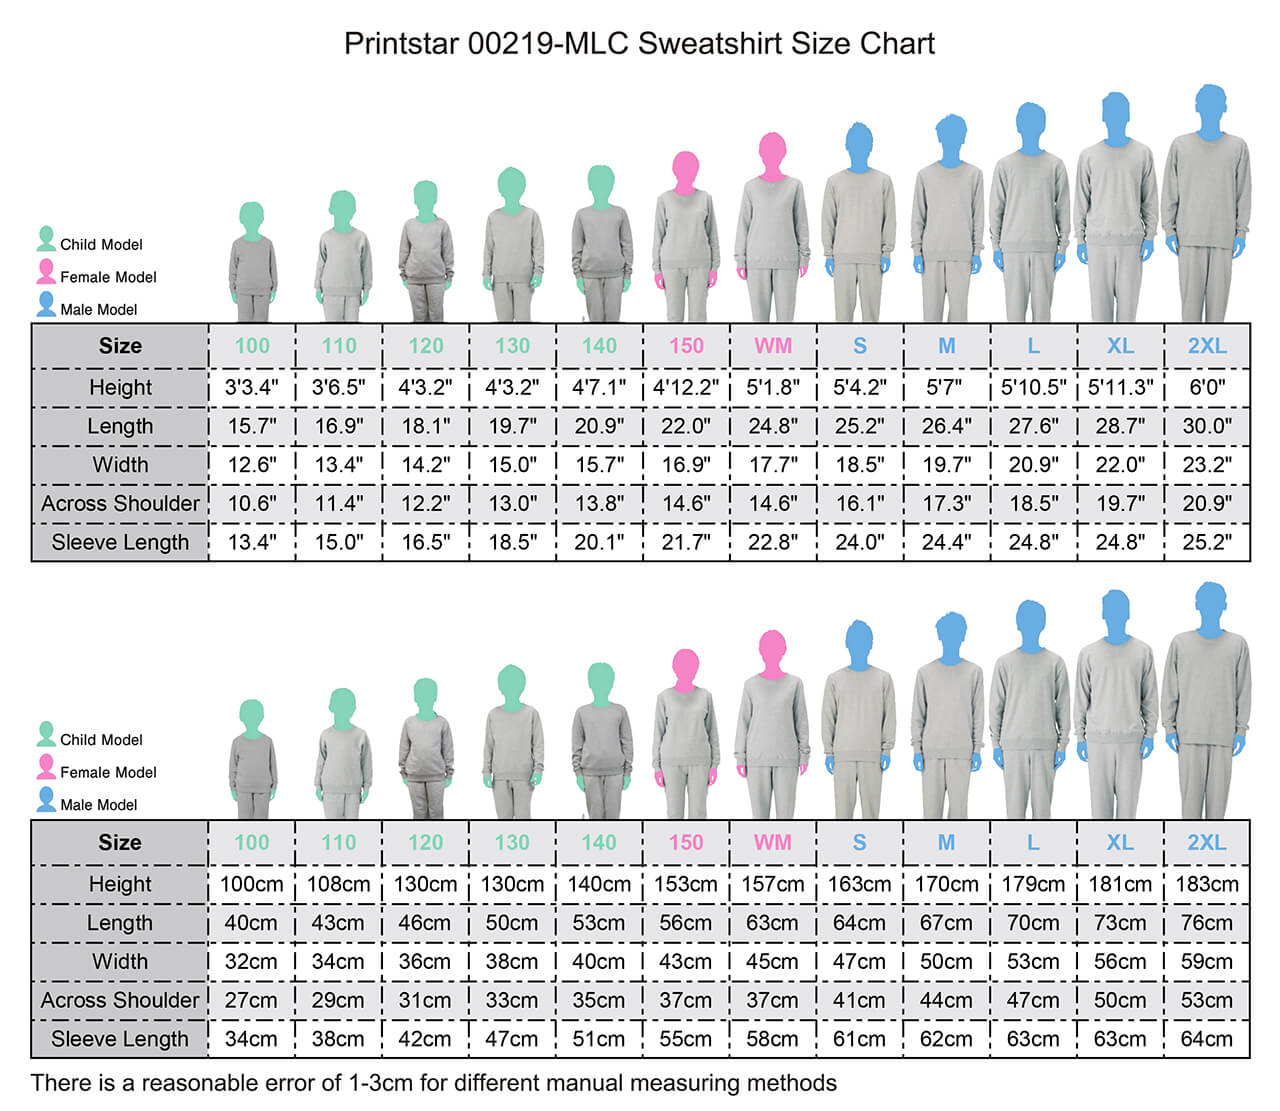 Printstar-00219-MLC-Sweatshirt-Size-Chart